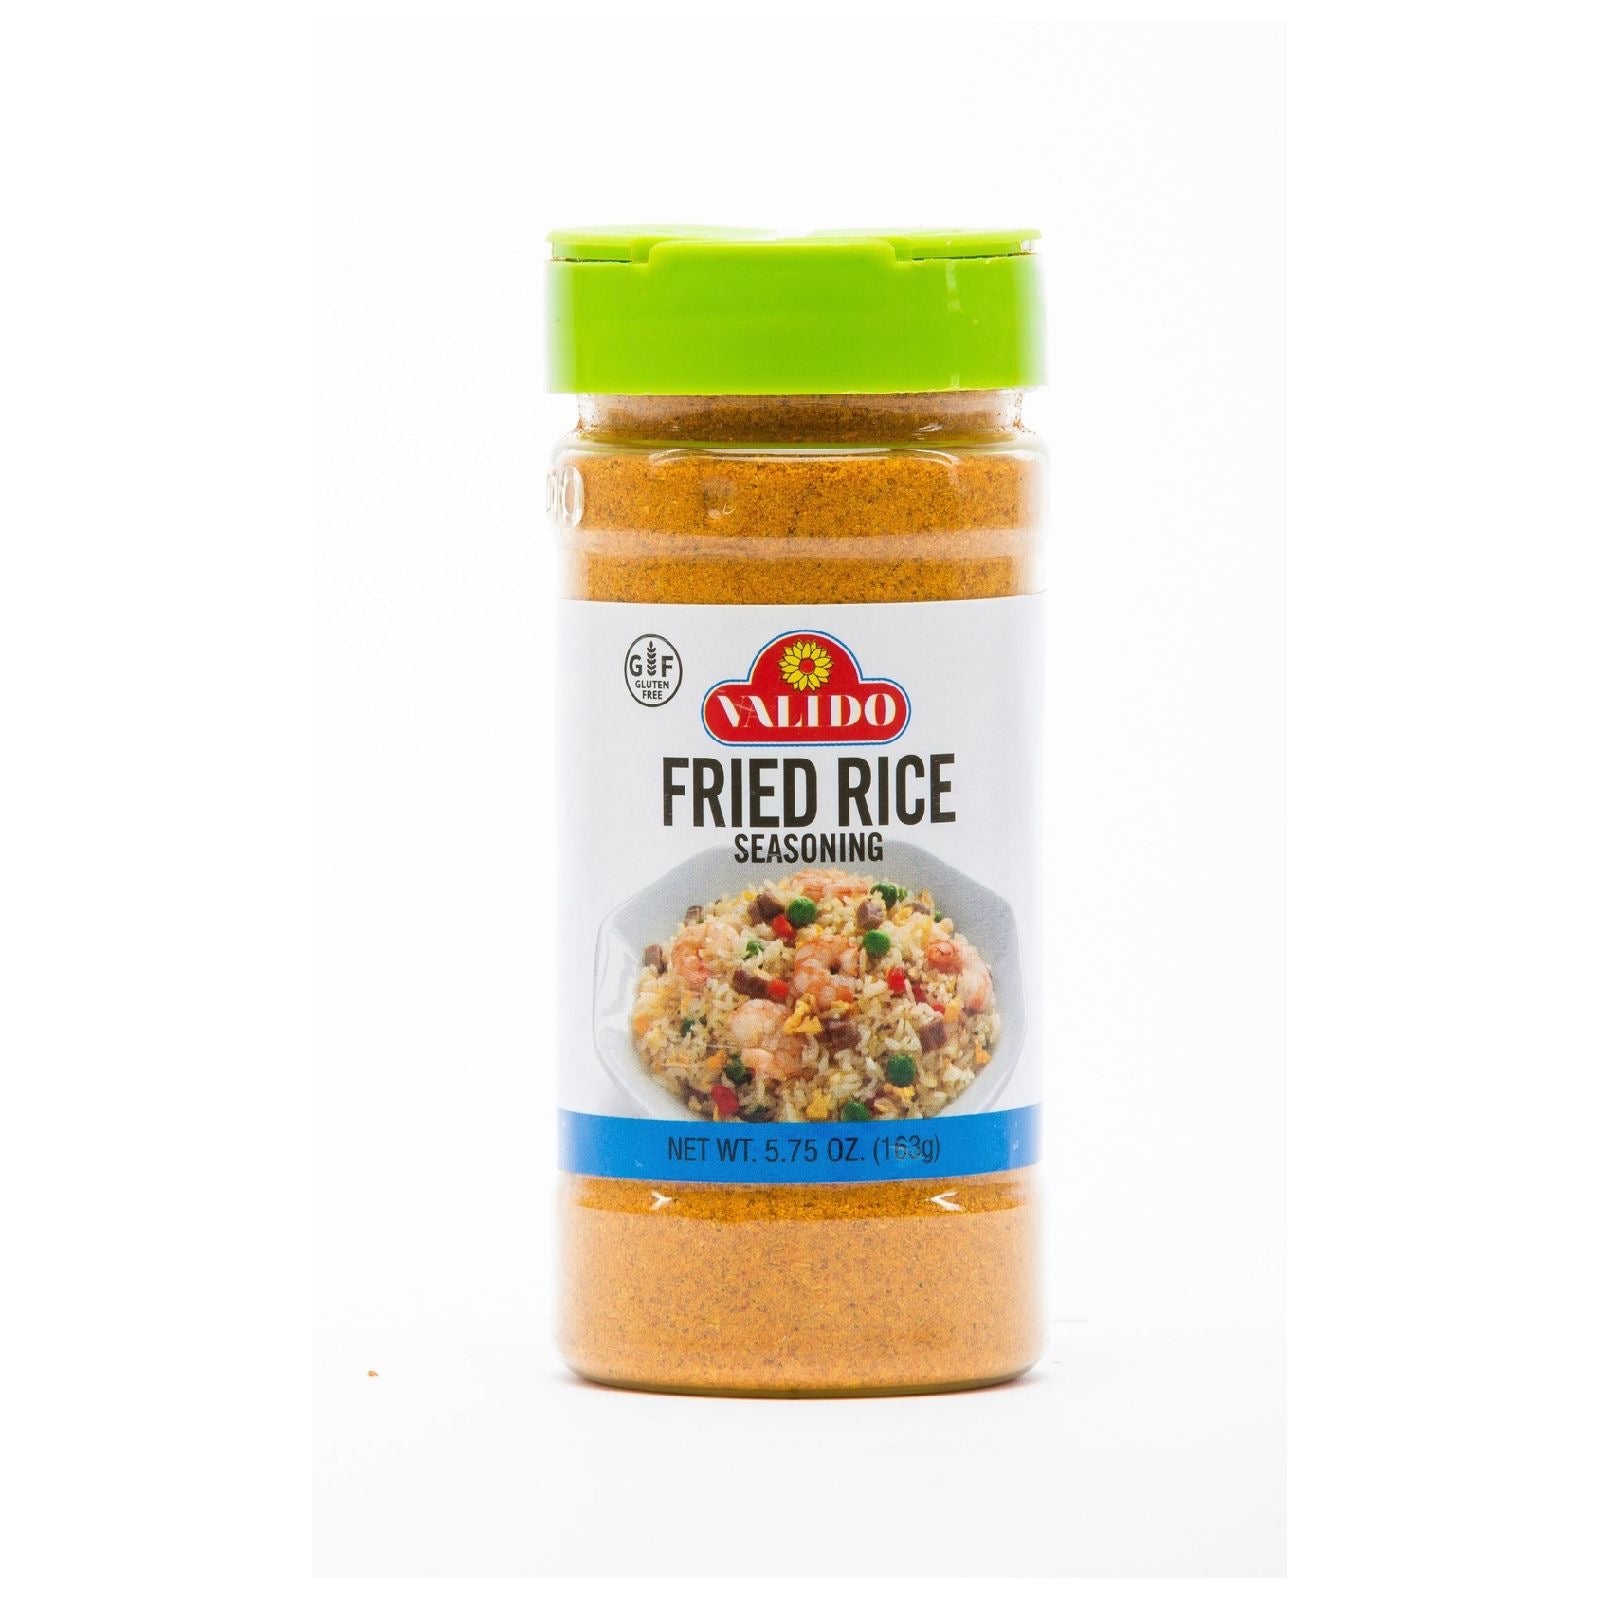 Valido Fried Rice Seasoning 11oz - Break Stop